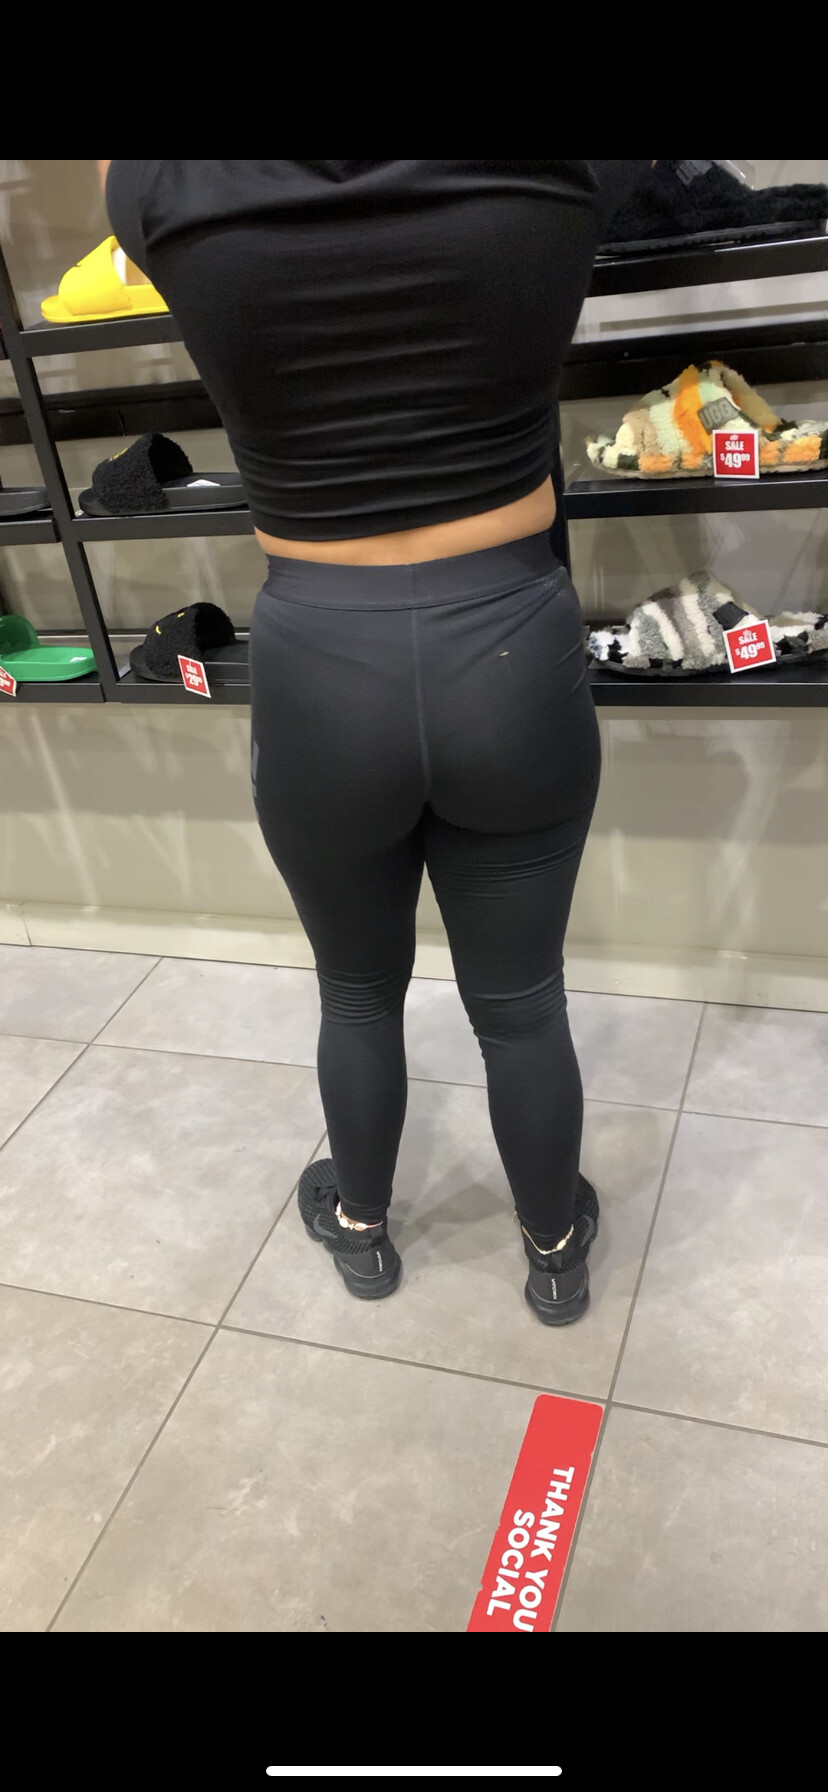 Mall Trip Pt 2, see through Nike, nipples out, teen ass - Spandex